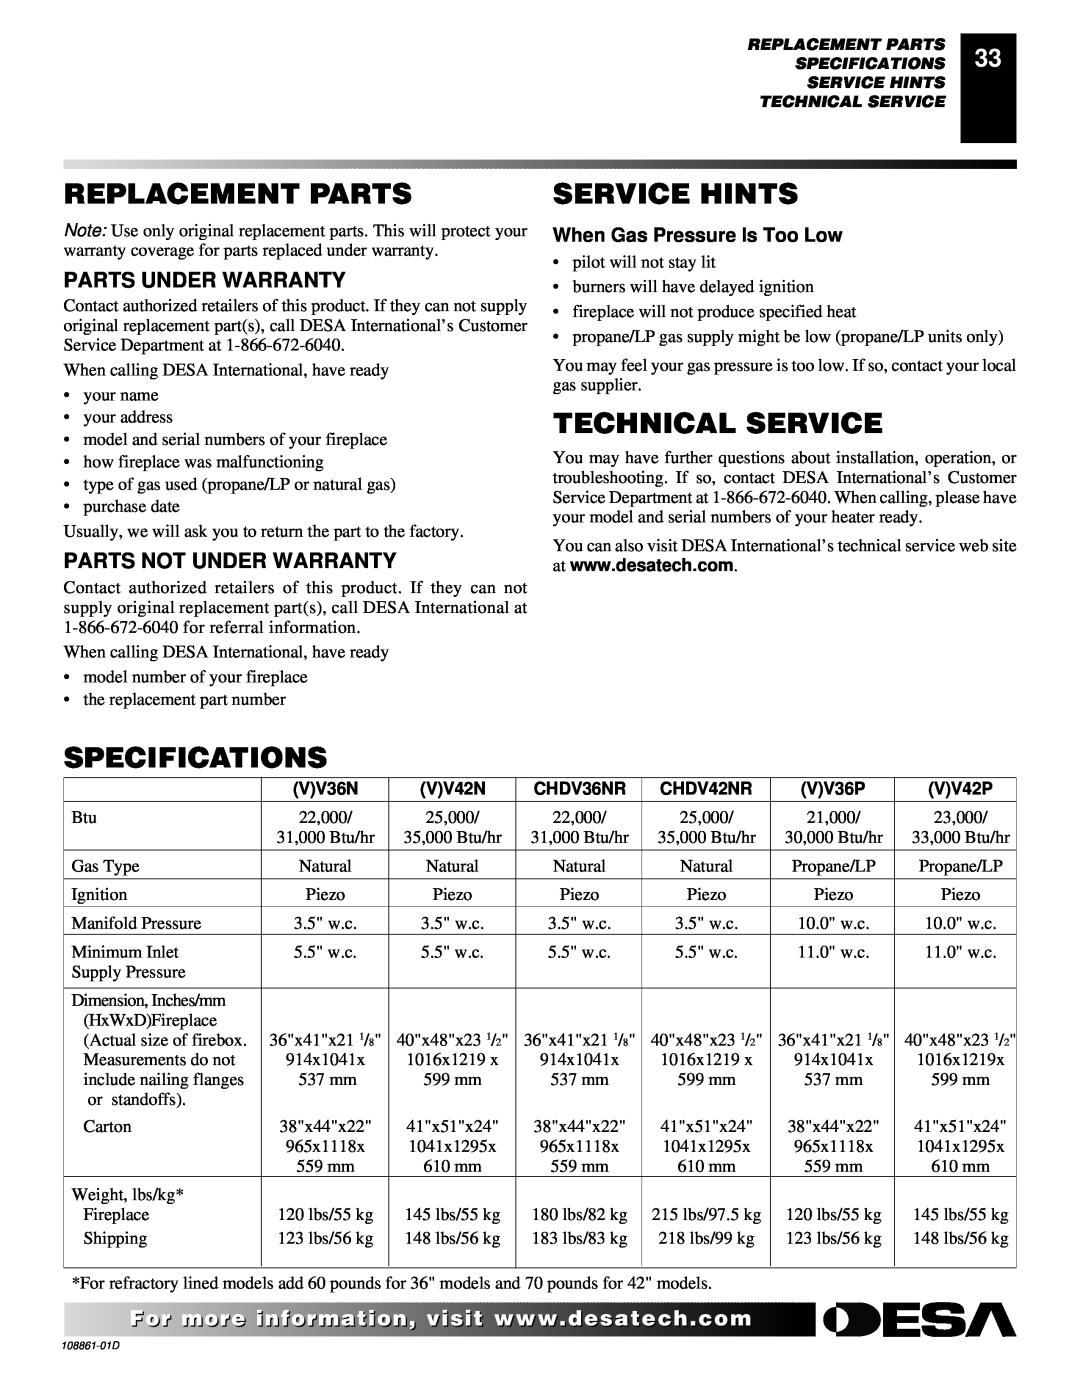 Desa CHDV36NR, (V)V42P, (V)V42N Replacement Parts, Service Hints, Technical Service, Specifications, Parts Under Warranty 